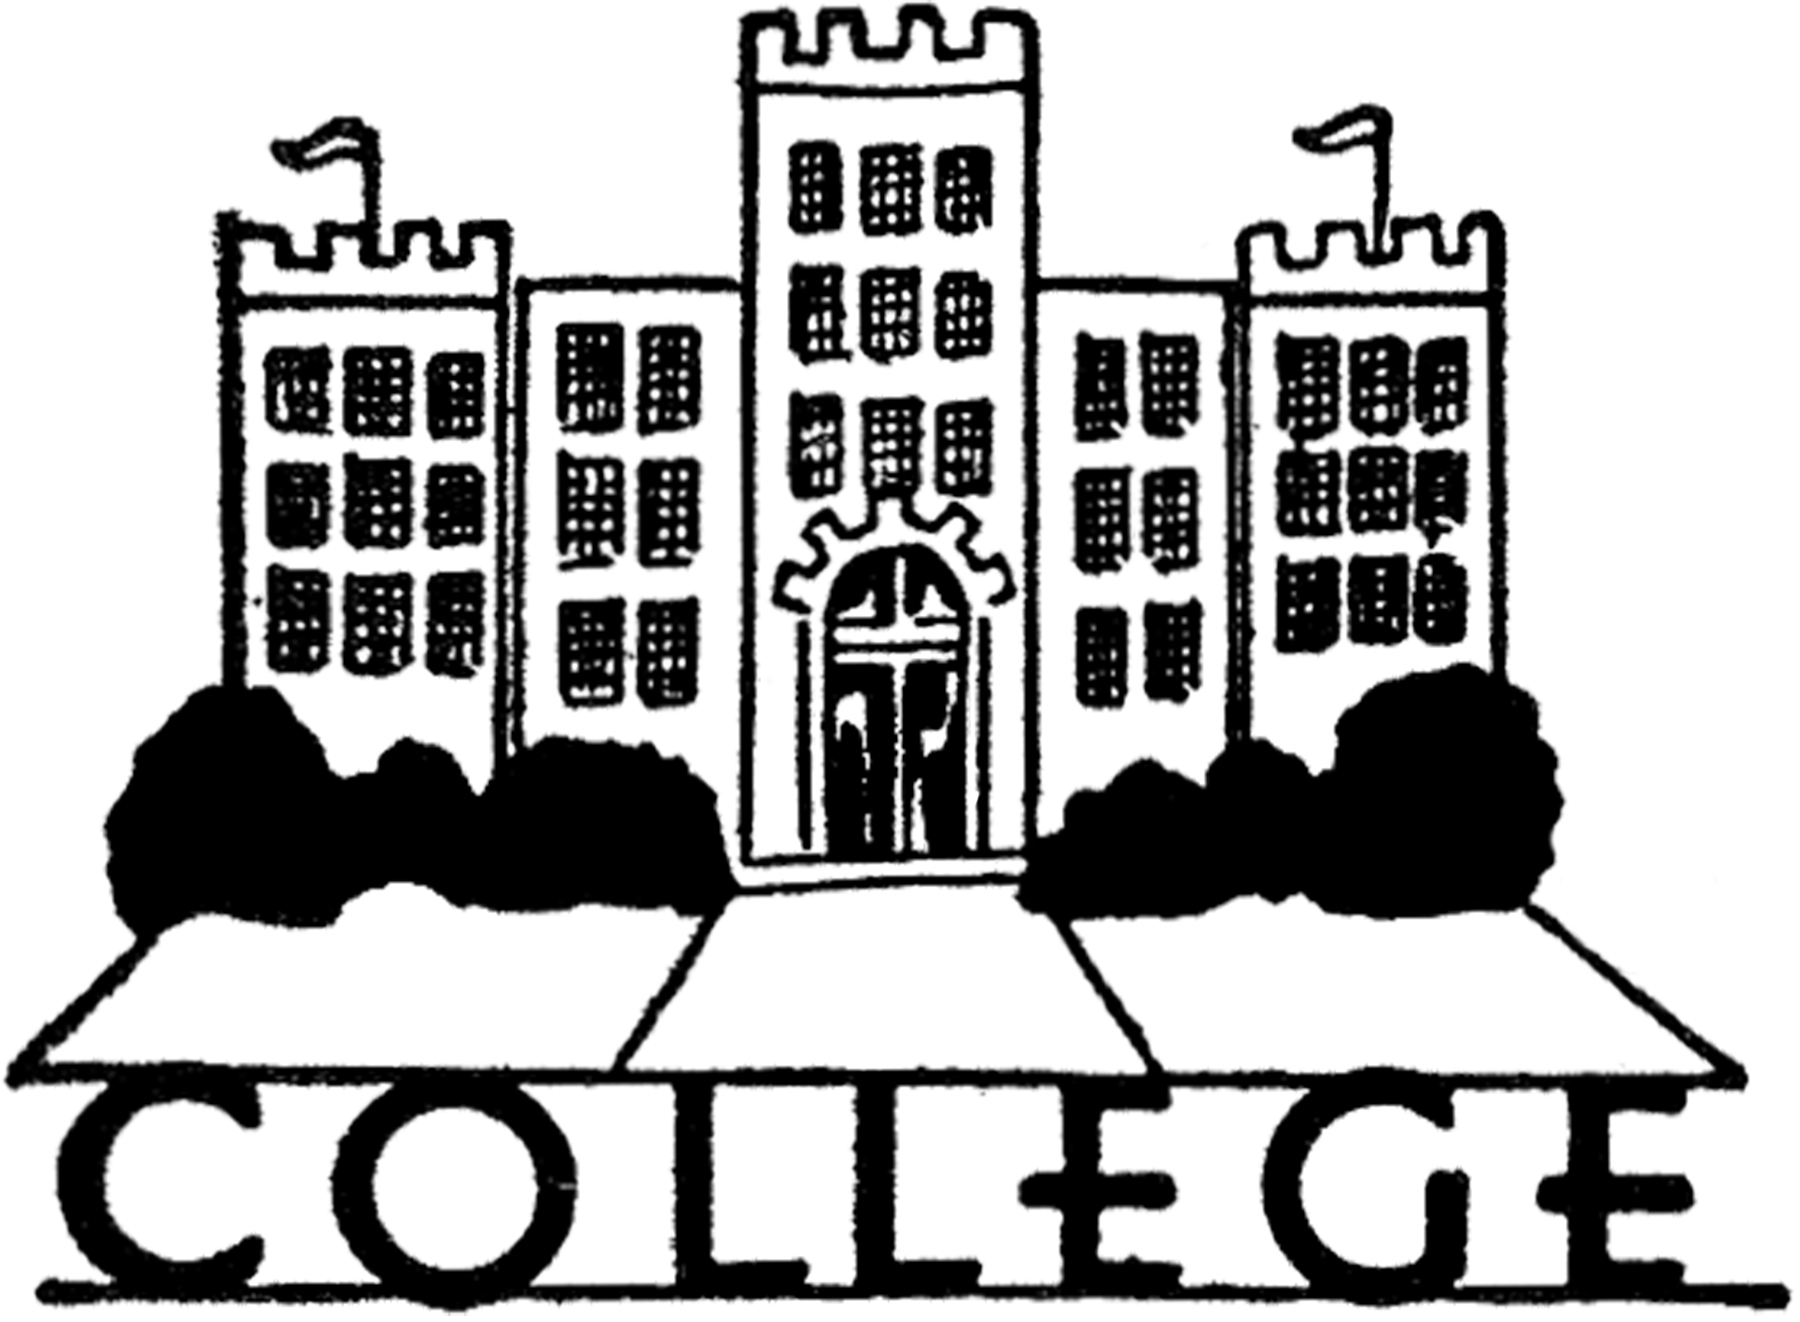 Free College Clipart Pictures - Clipartix